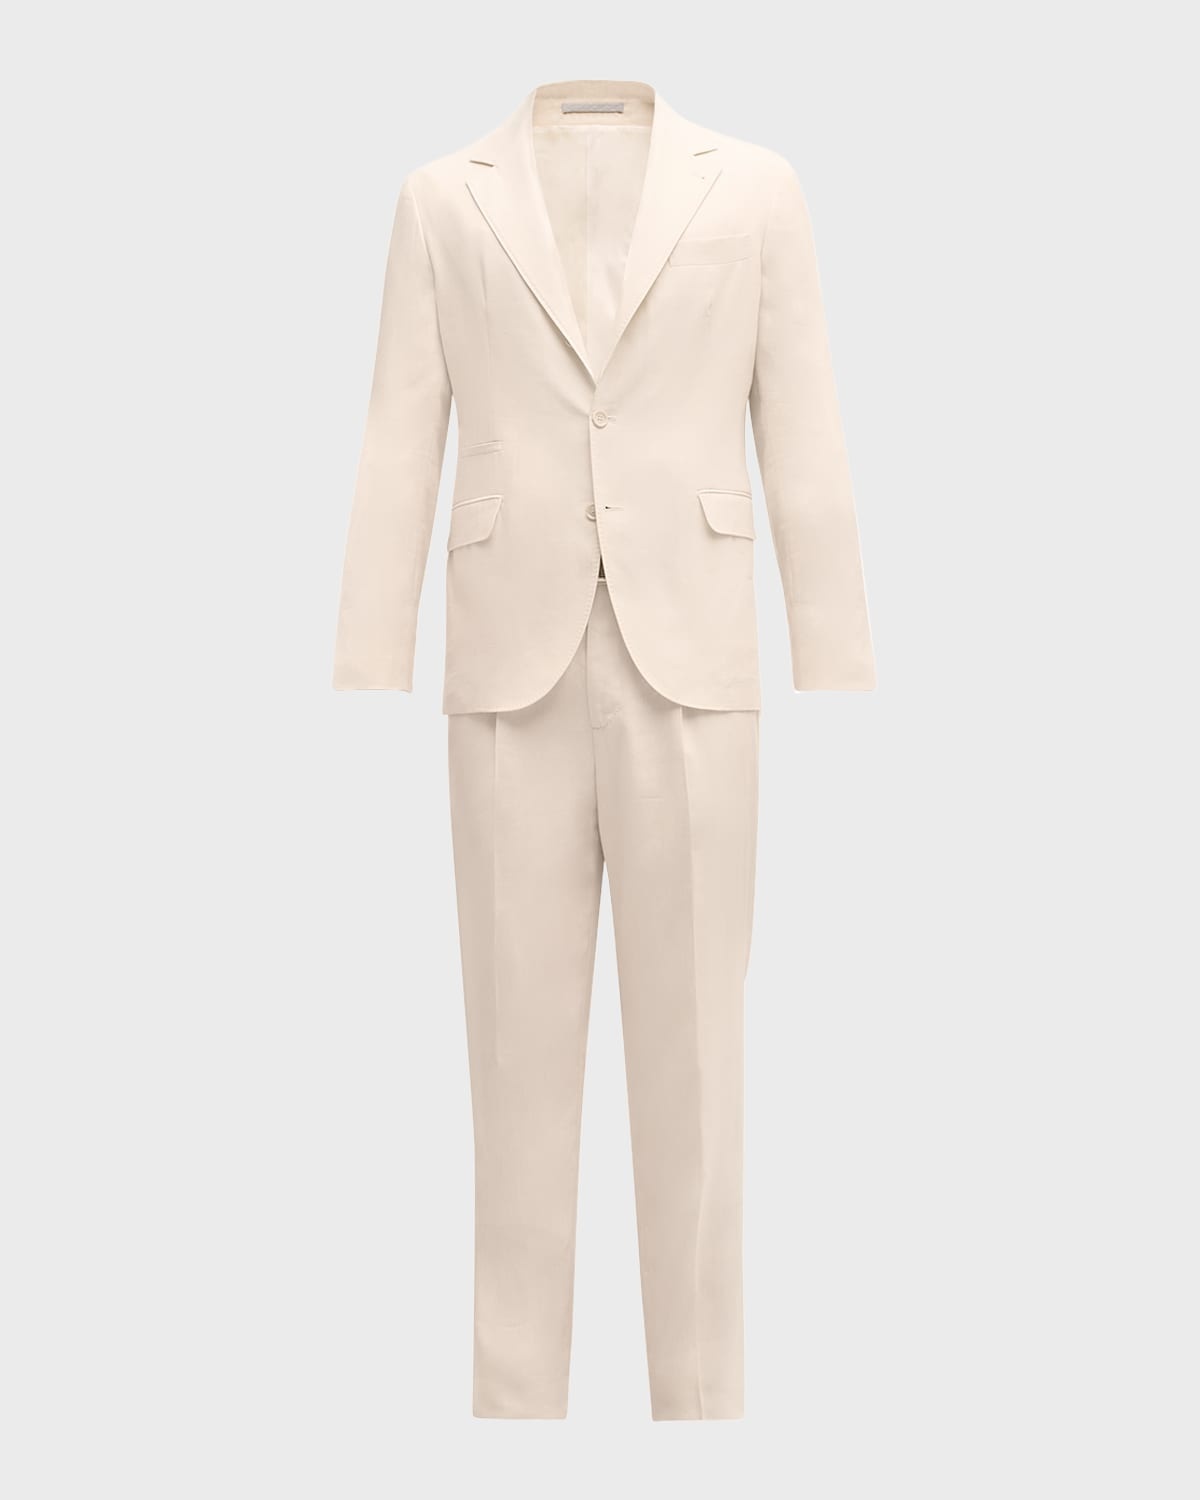 Men's Linen and Wool Solid Suit - 10